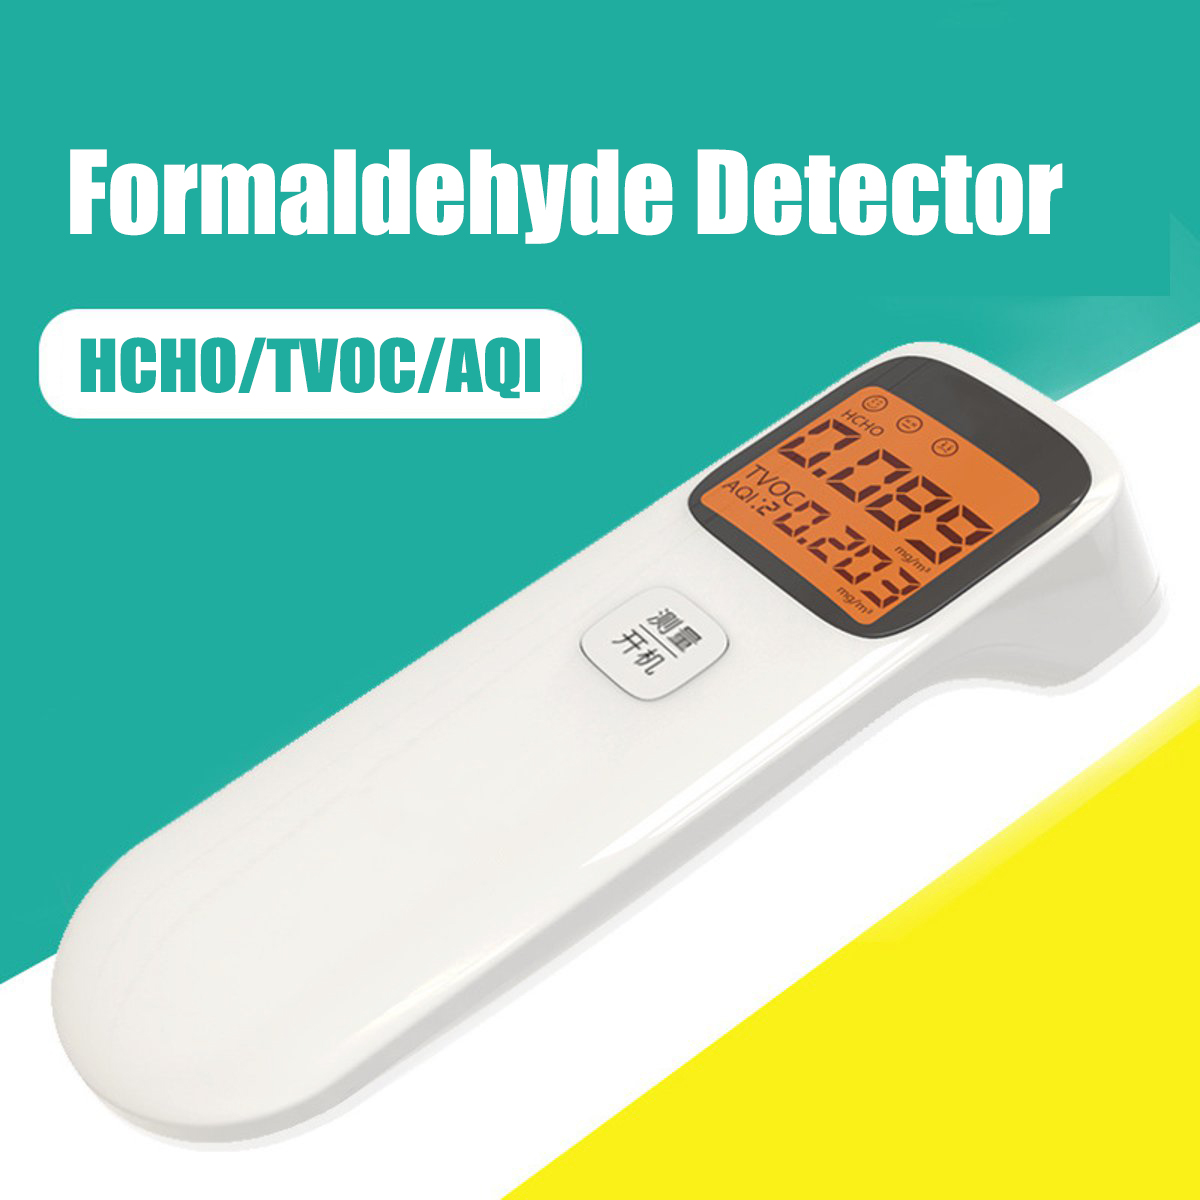 Smart-Air-Formaldehyde-Gas-Detector-Monitors-Tester-For-HCHOTVOCAQI-Detection-1468235-3